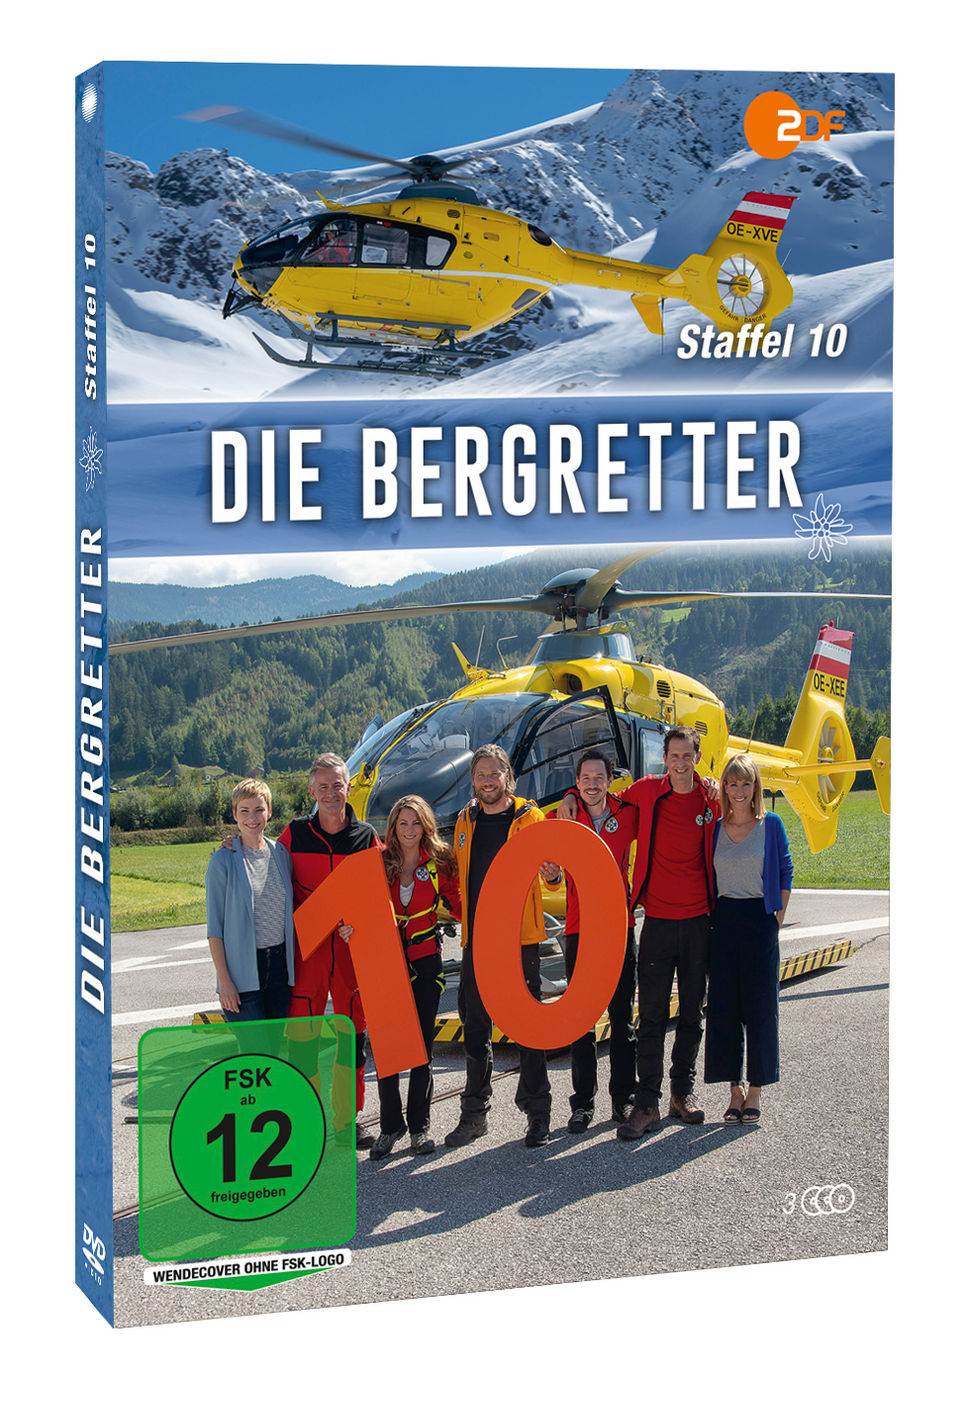 Die Bergretter - Staffel 10 DVD bei Weltbild.de bestellen